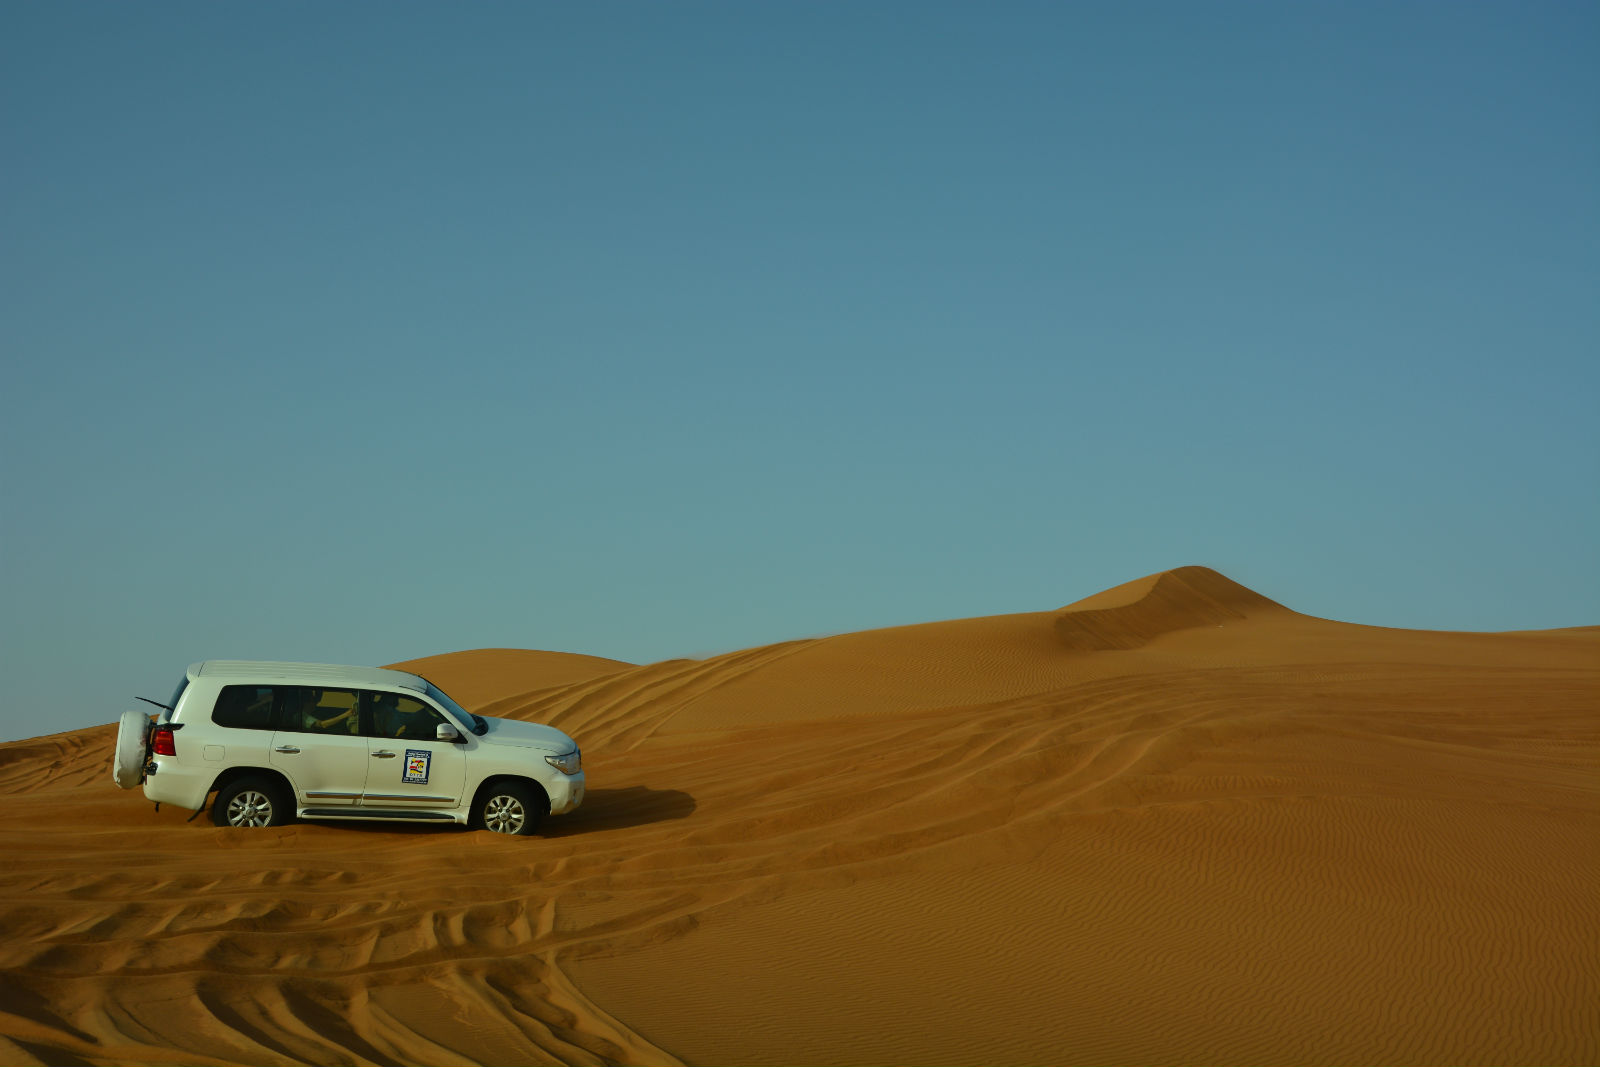 Dune-Bashing Dubai